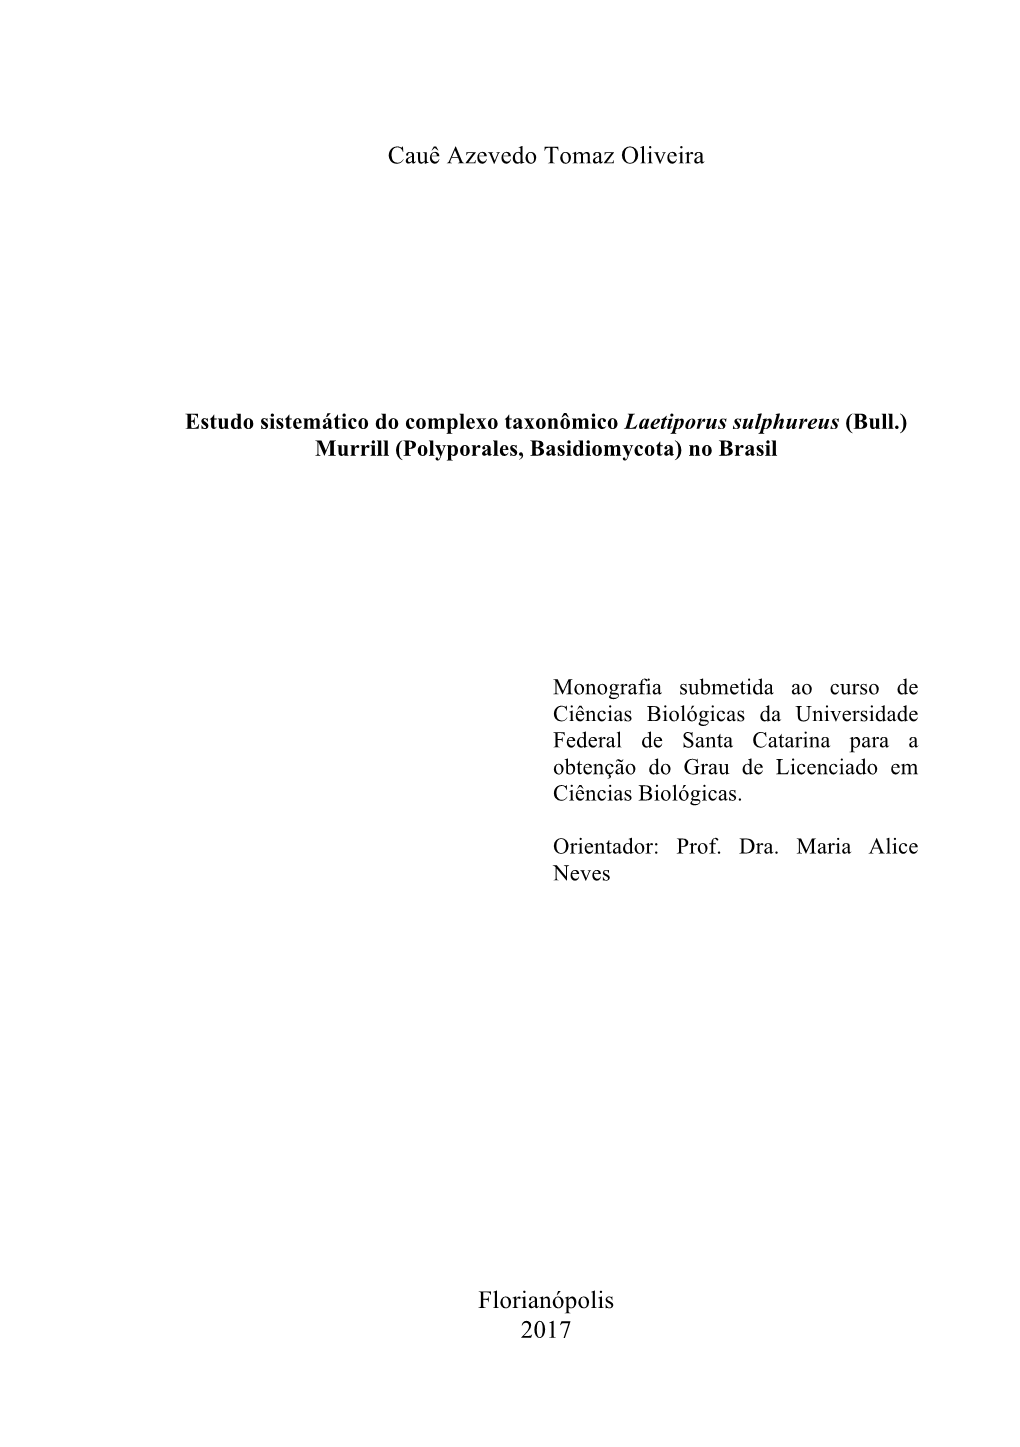 Estudo Sistemático Do Complexo Taxonômico Laetiporus Sulphureus (Bull.) Murrill (Polyporales, Basidiomycota) No Brasil